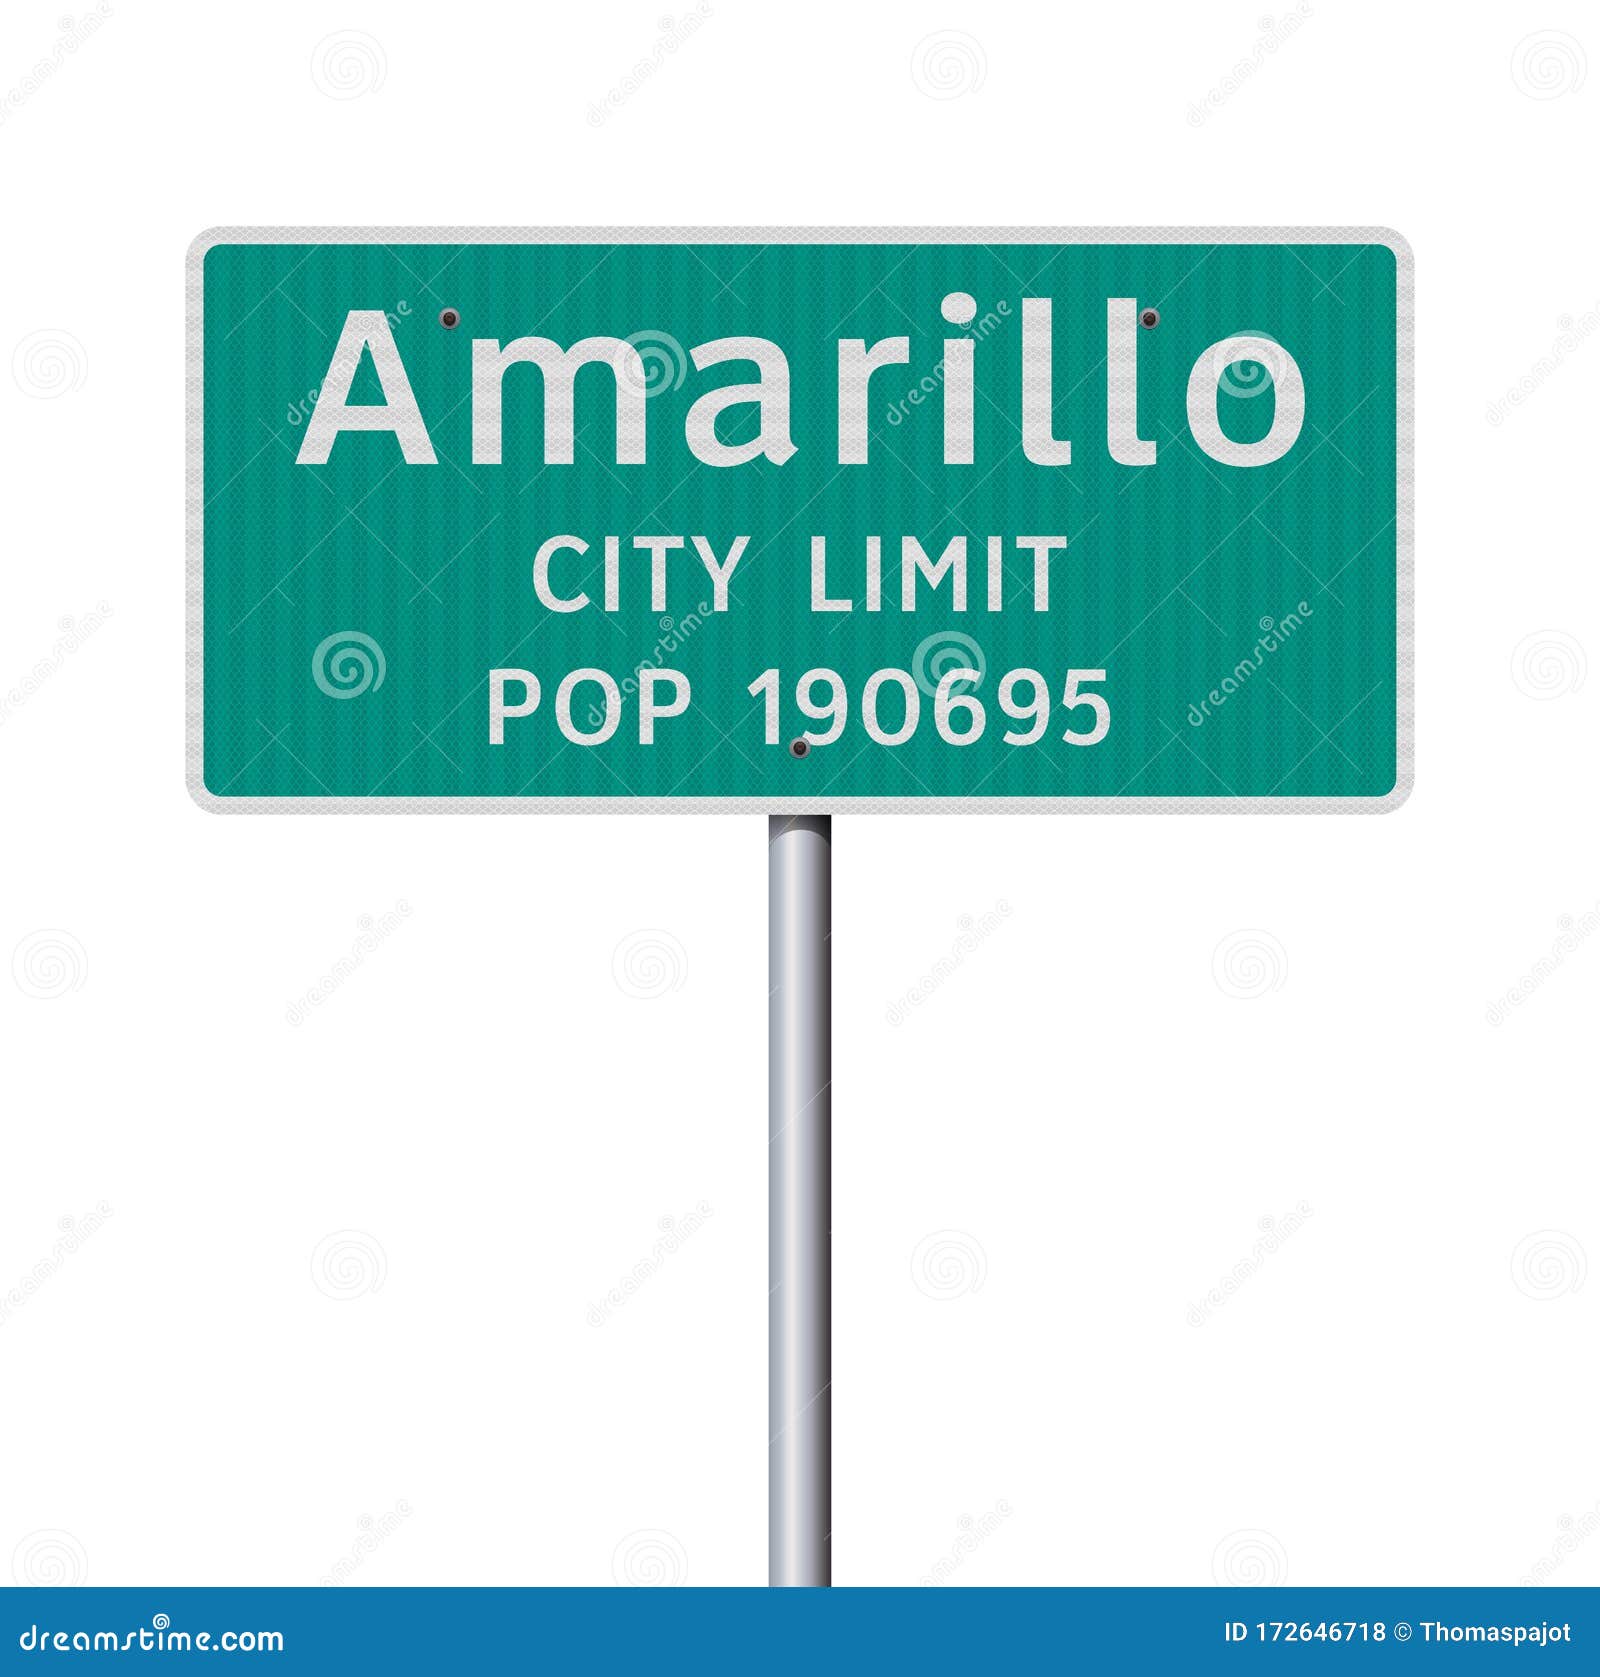 amarillo city limit road sign